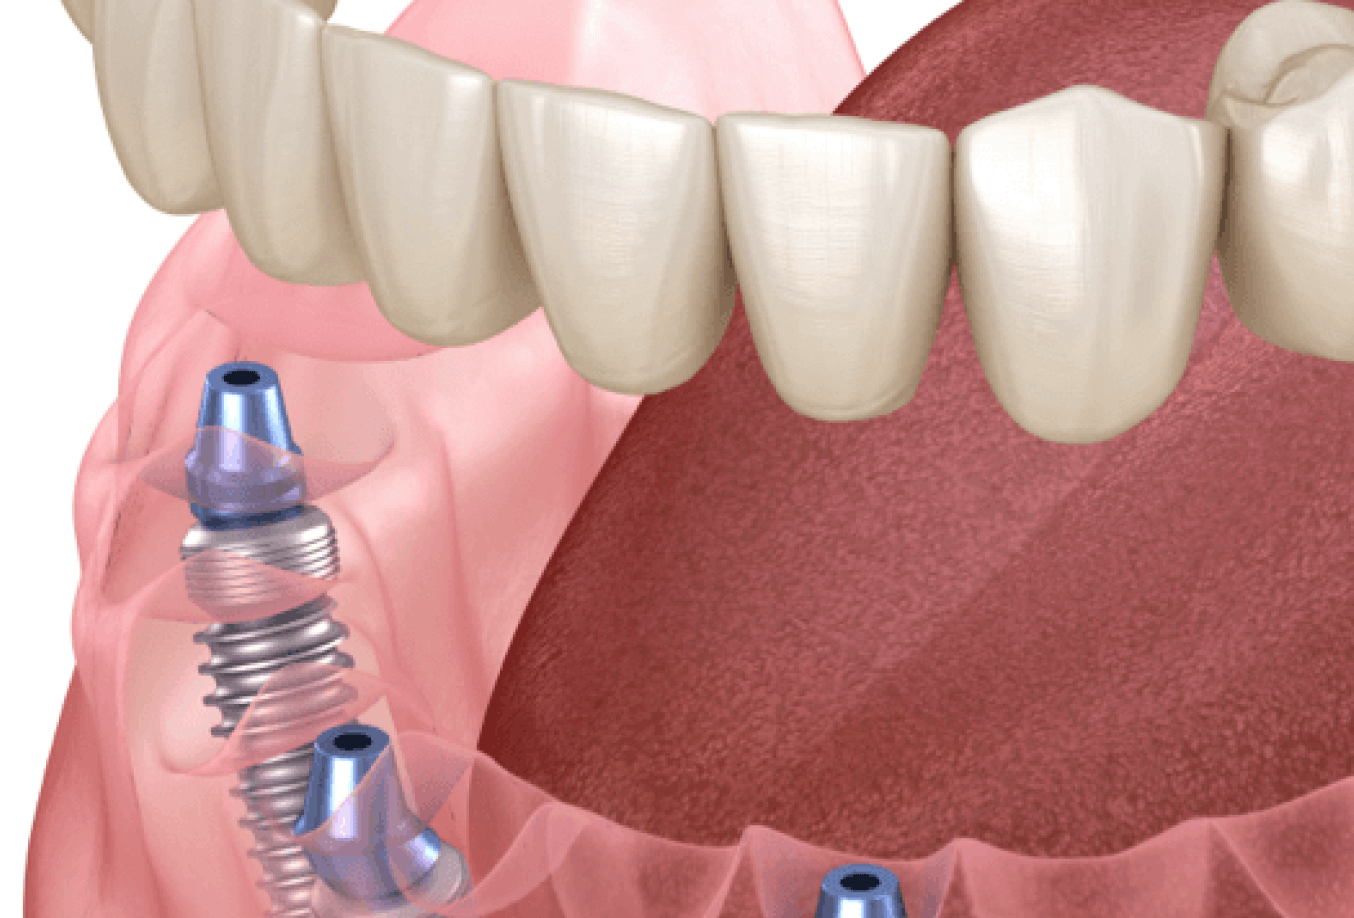 Graphic of dental implants